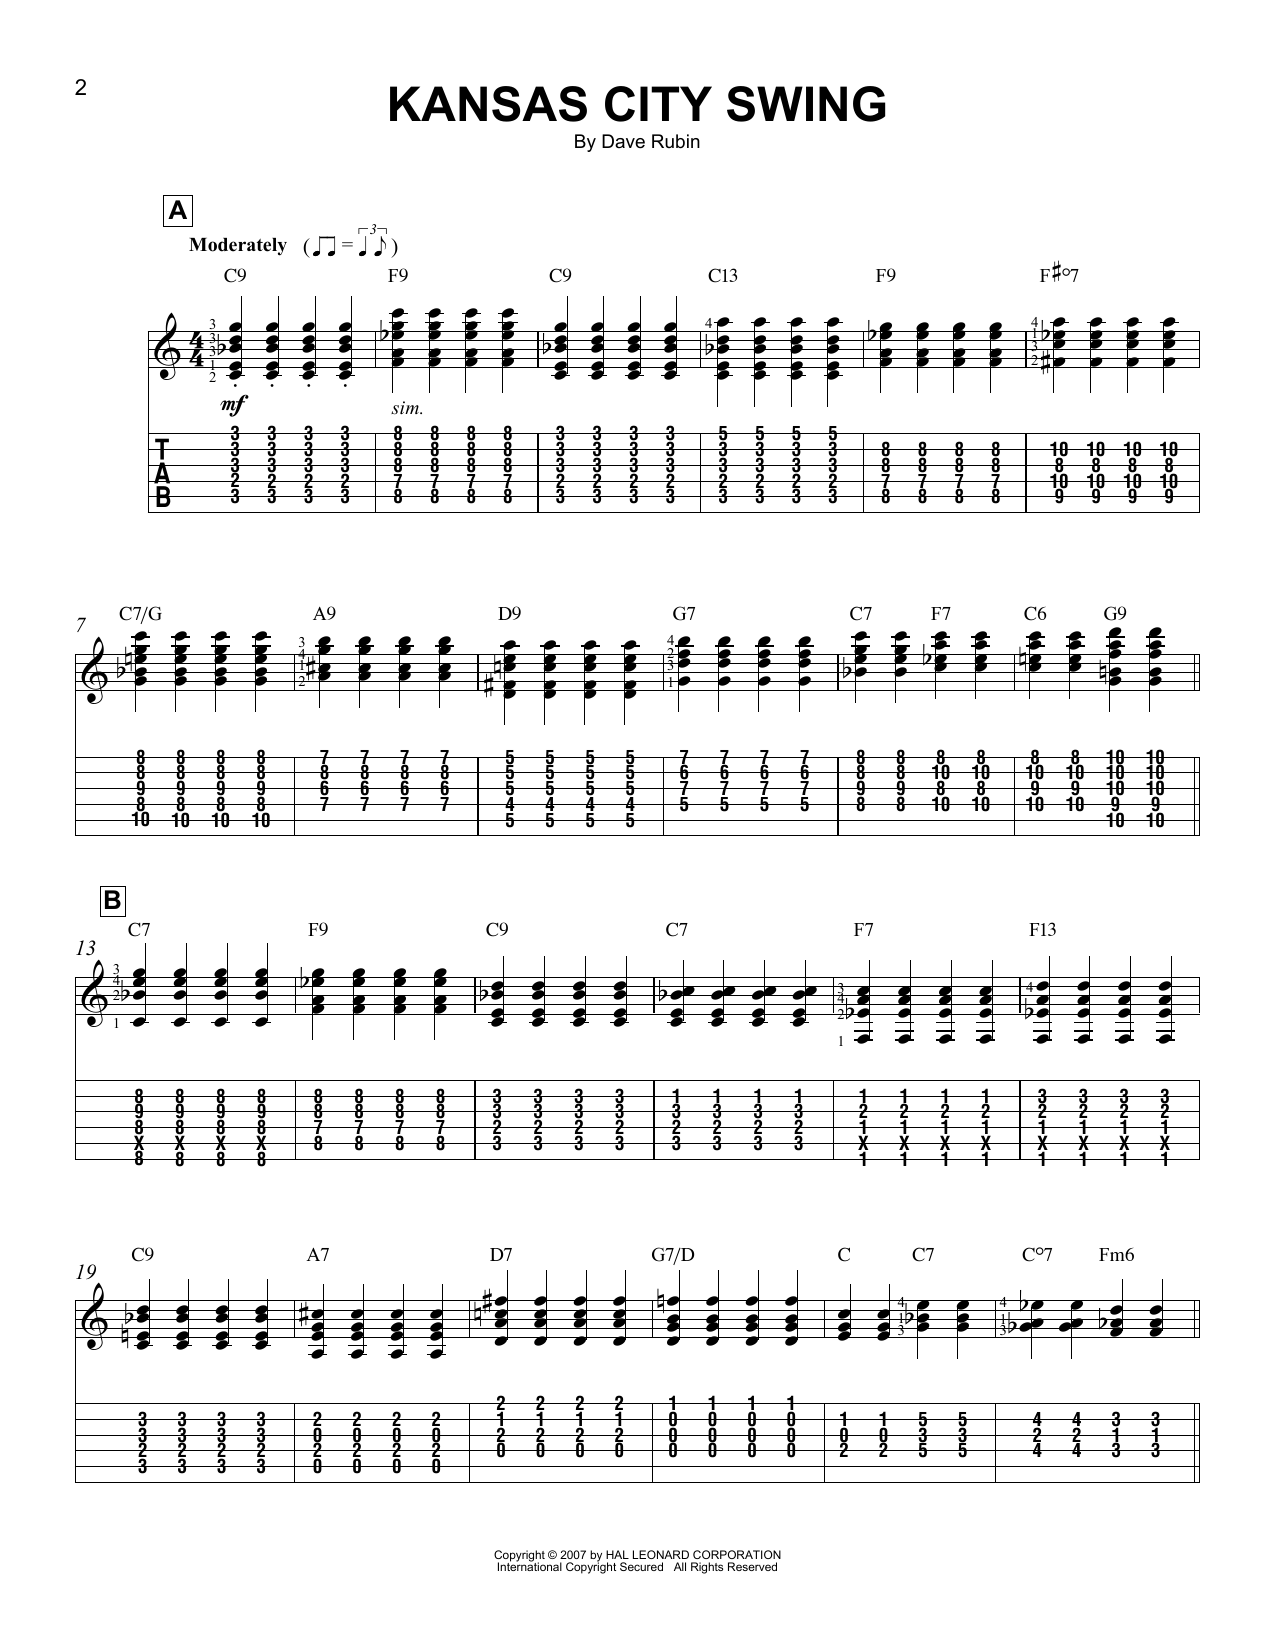 Dave Rubin Kansas City Swing Sheet Music Notes & Chords for Easy Guitar Tab - Download or Print PDF